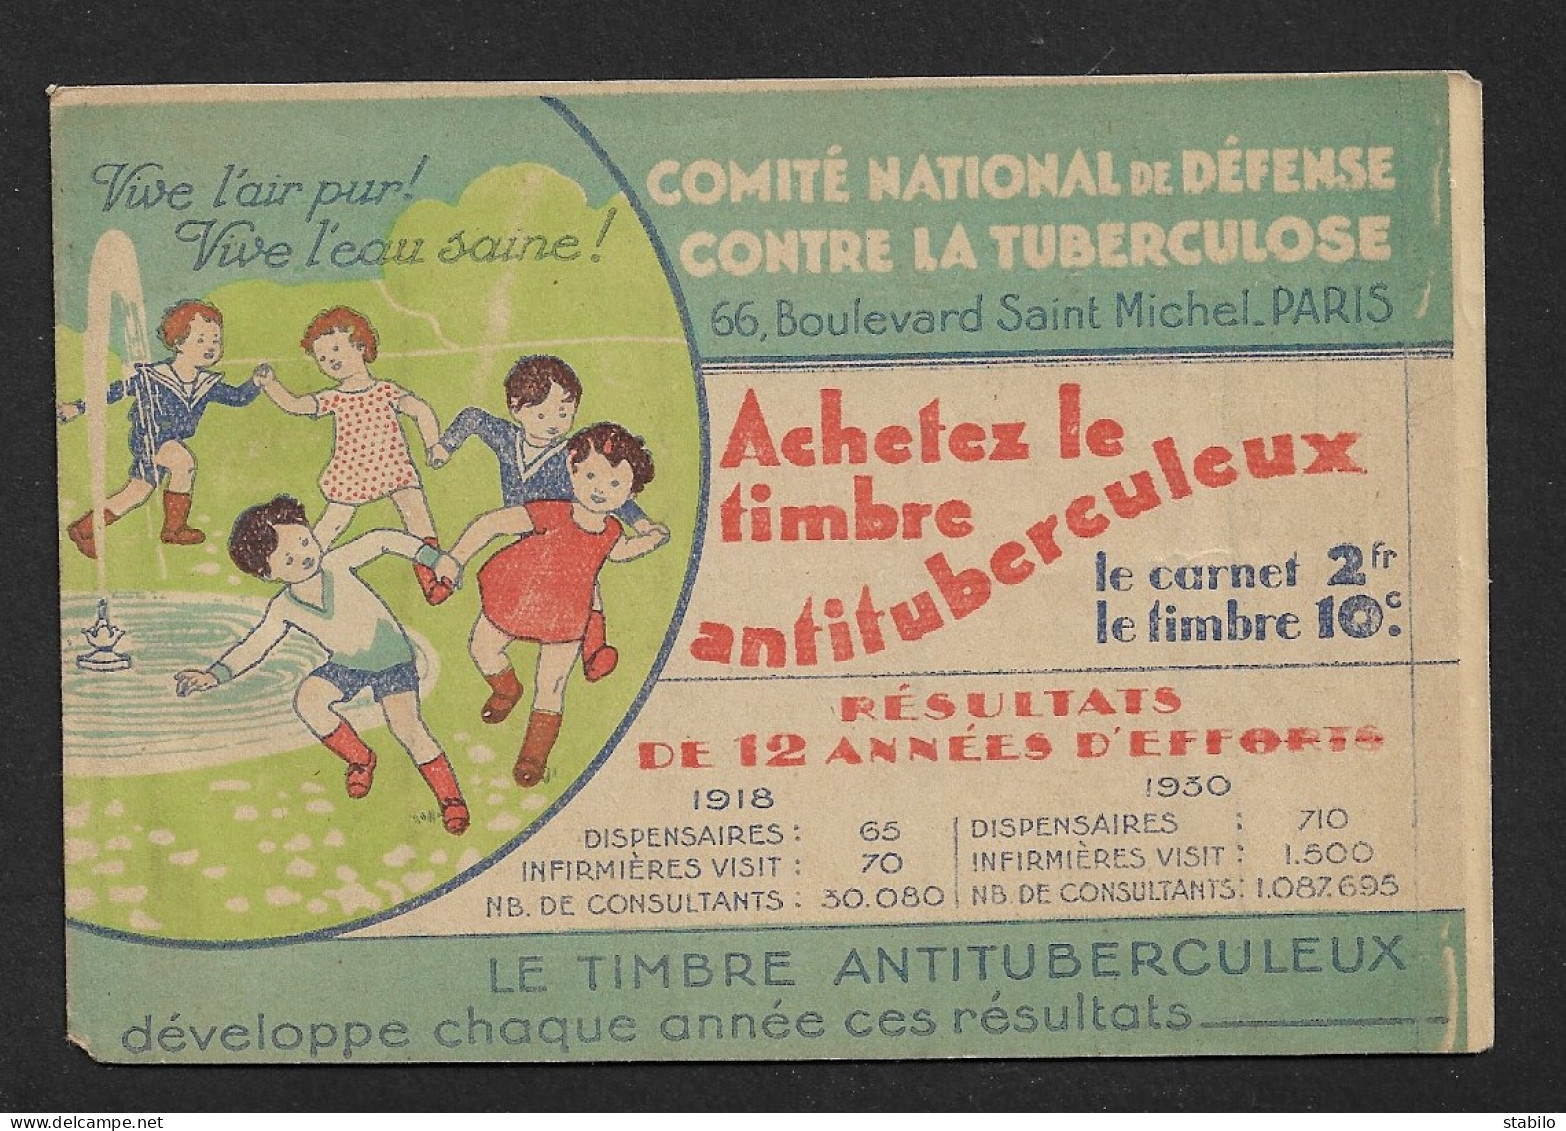 CARNET DE VIGNETTES - COMITE DE DEFENSE CONTRE LA TUBERCULOSE 1930 - FORMAT PLIE 13 X 9 CM - Cinderellas